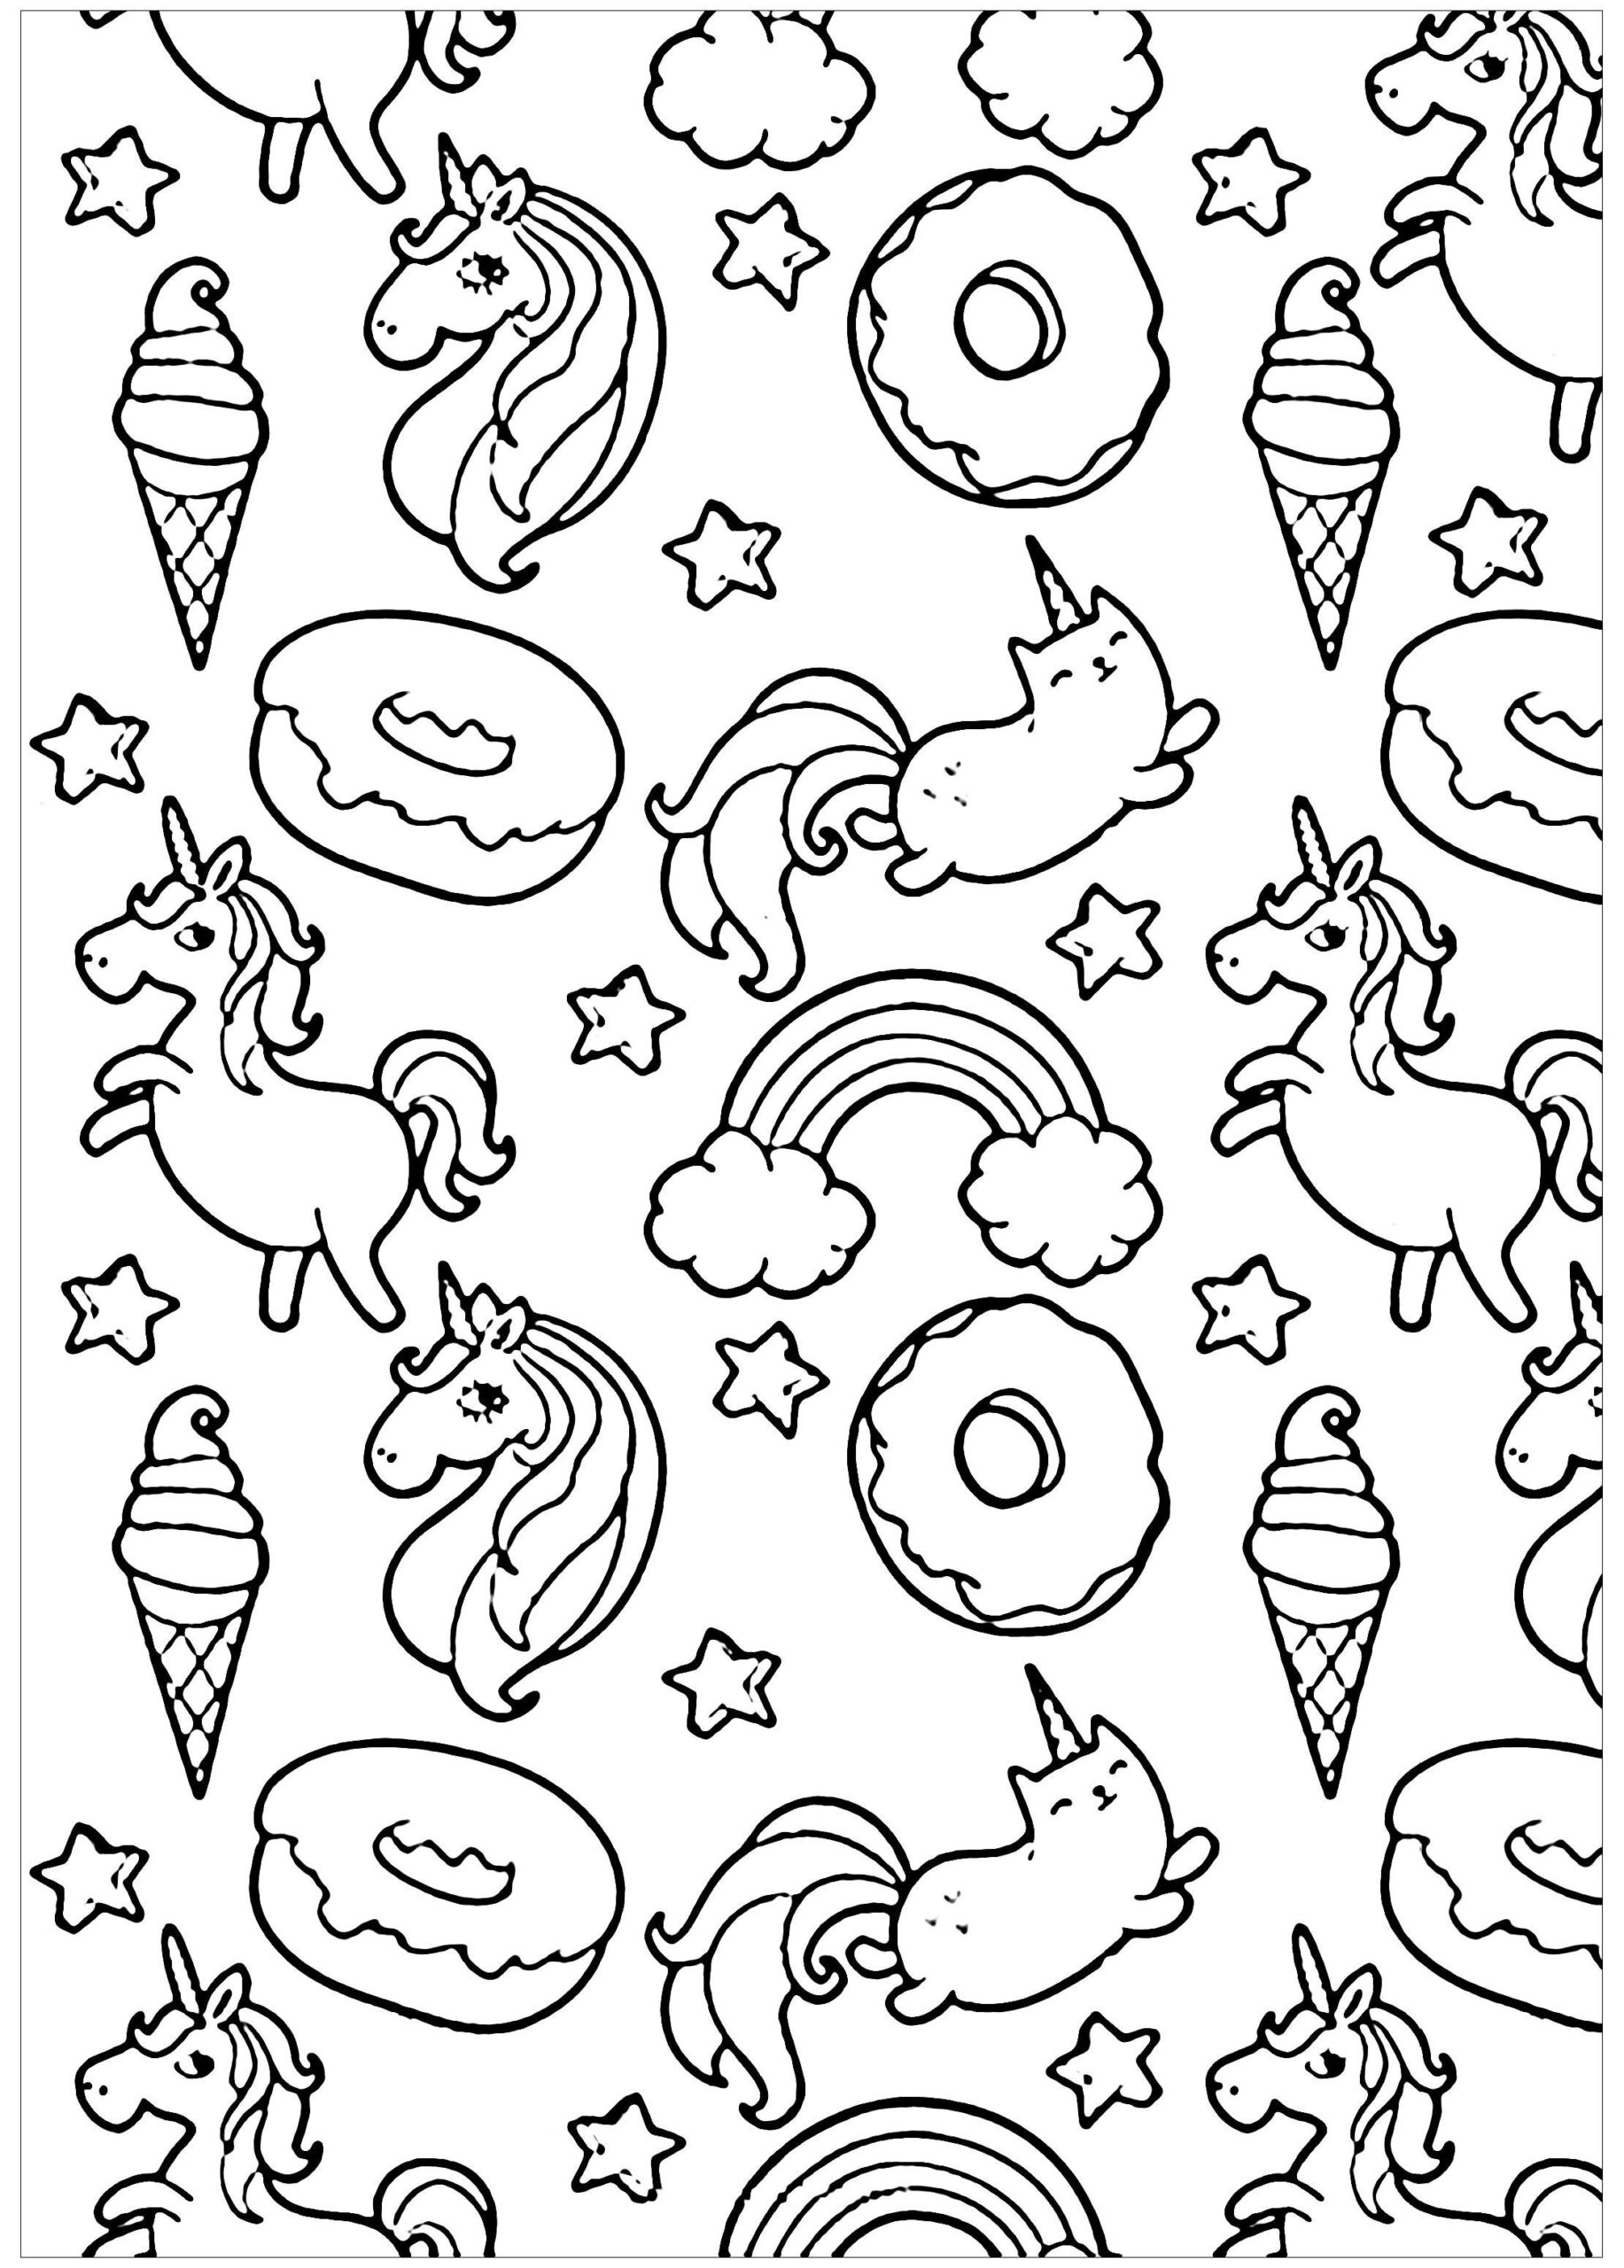 Coloriage-Kawaii-Licorne-A-Imprimer-Dernier-Design-Pusheen-Donuts-Et concernant Coloriage Donuts Kawaii A Imprimer